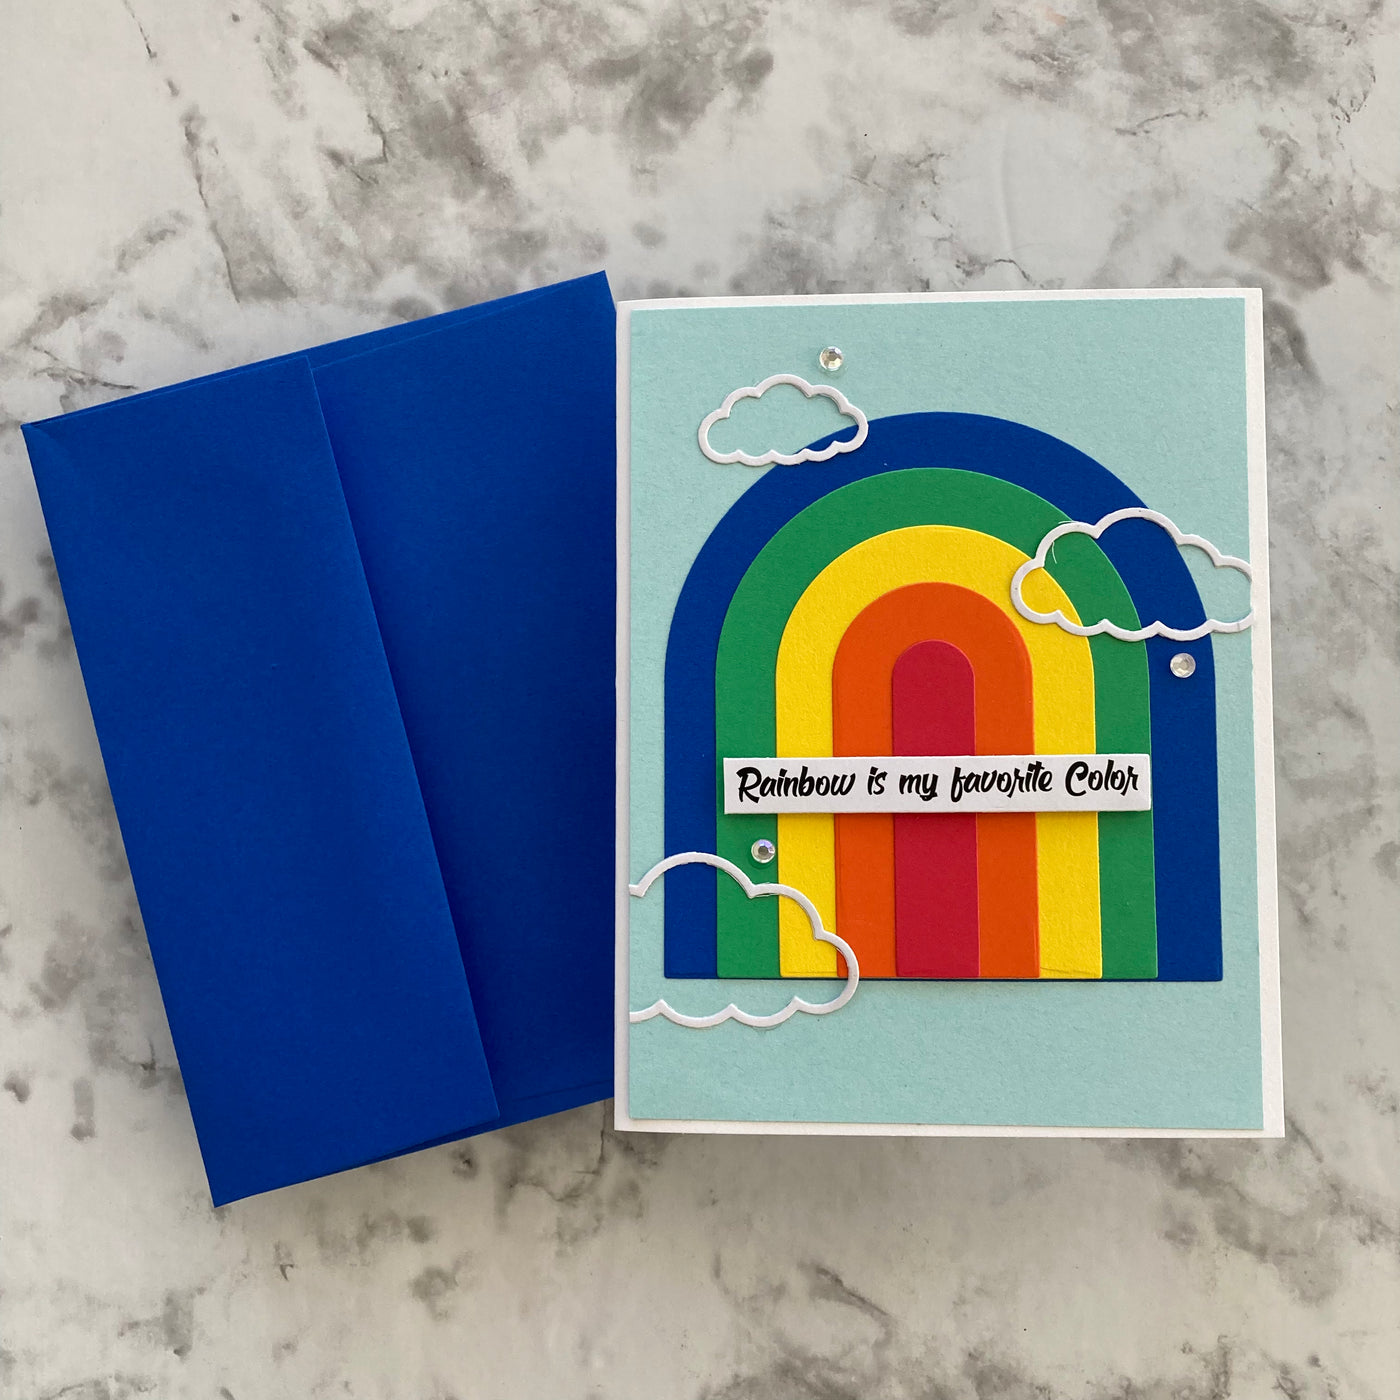 handmade rainbow card featuring a matching blue envelope